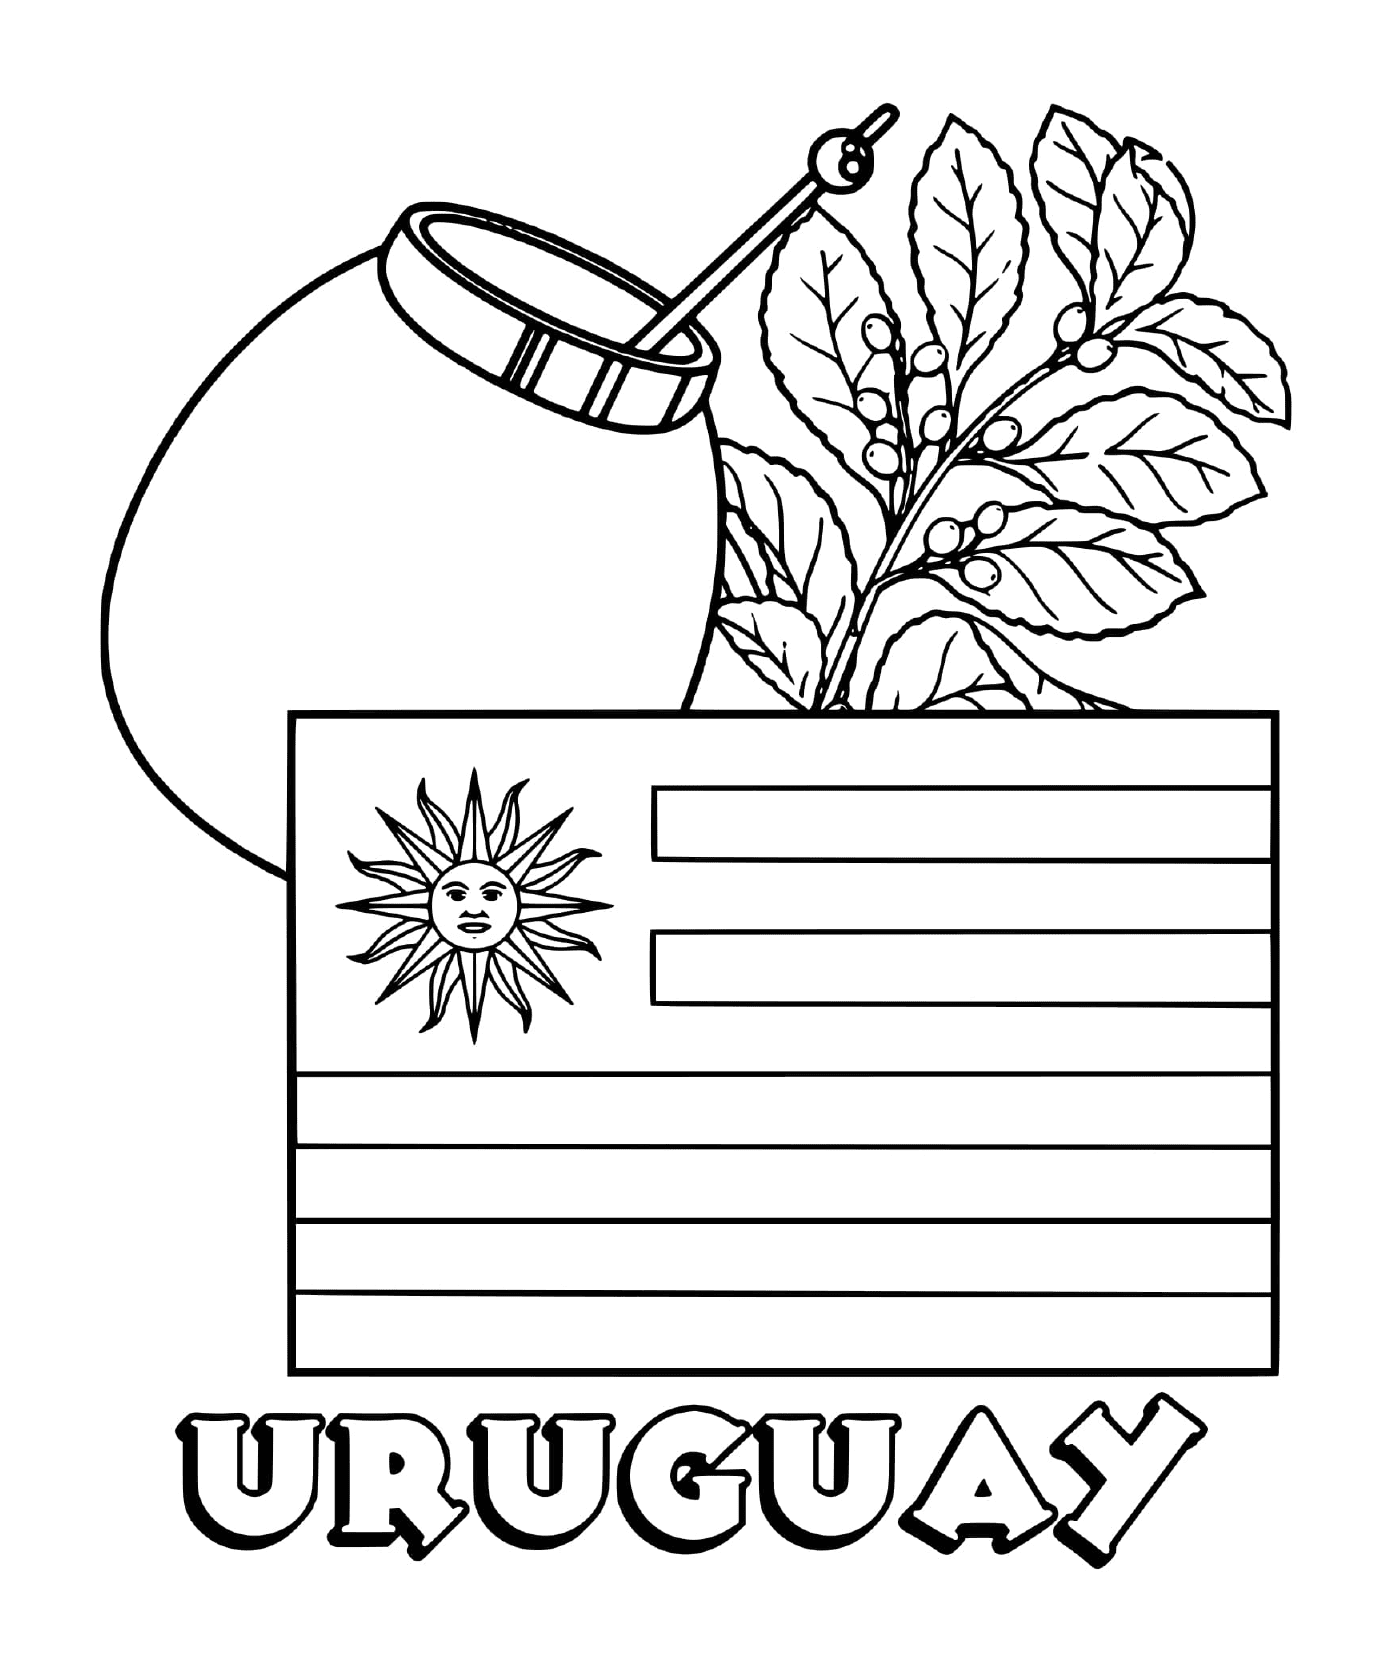  Bandera uruguaya, yesba mate 